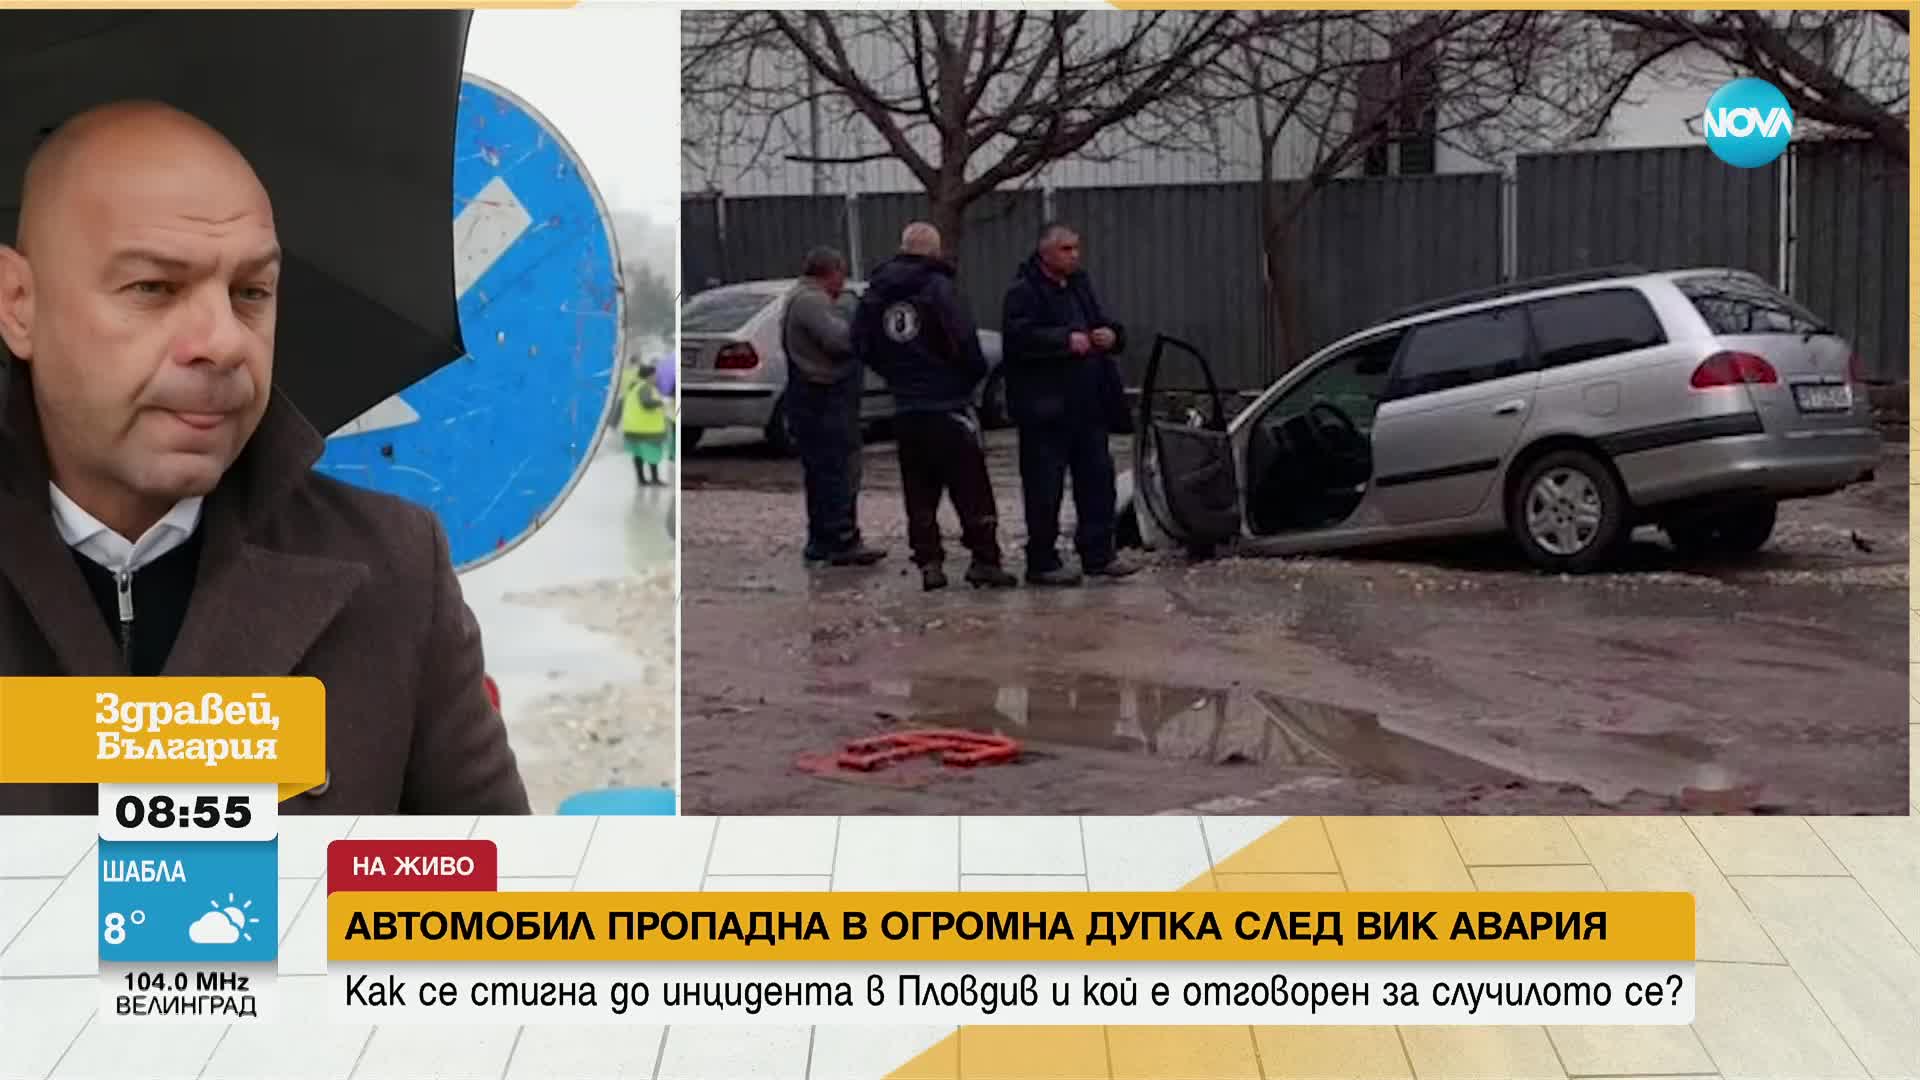 Автомобил пропадна в огромна дупка след ВиК авария в Пловдив (ВИДЕО)